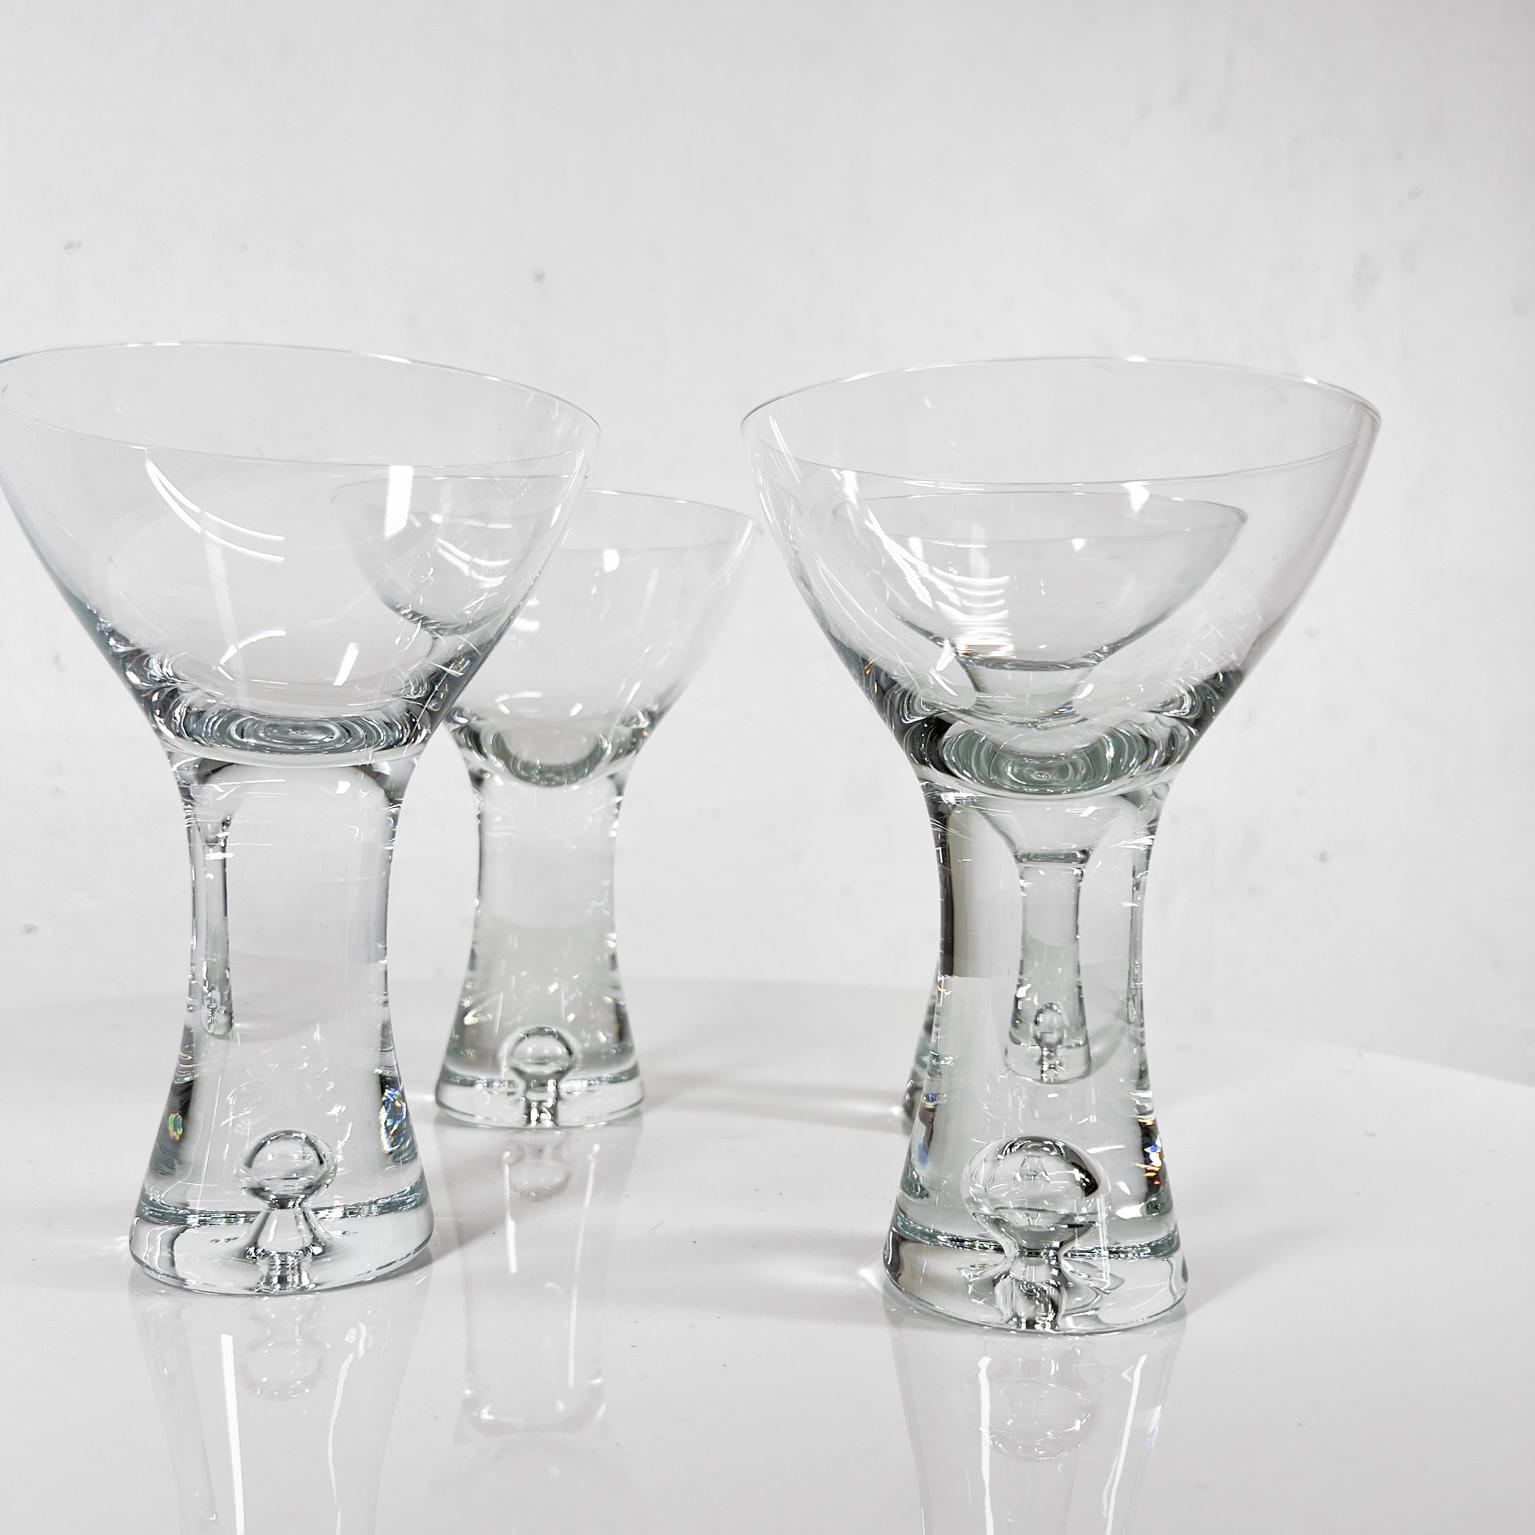 1952 Tapio Wirkkala Iittala Finland Set of 4 Martini Cocktail Glasses For Sale 1